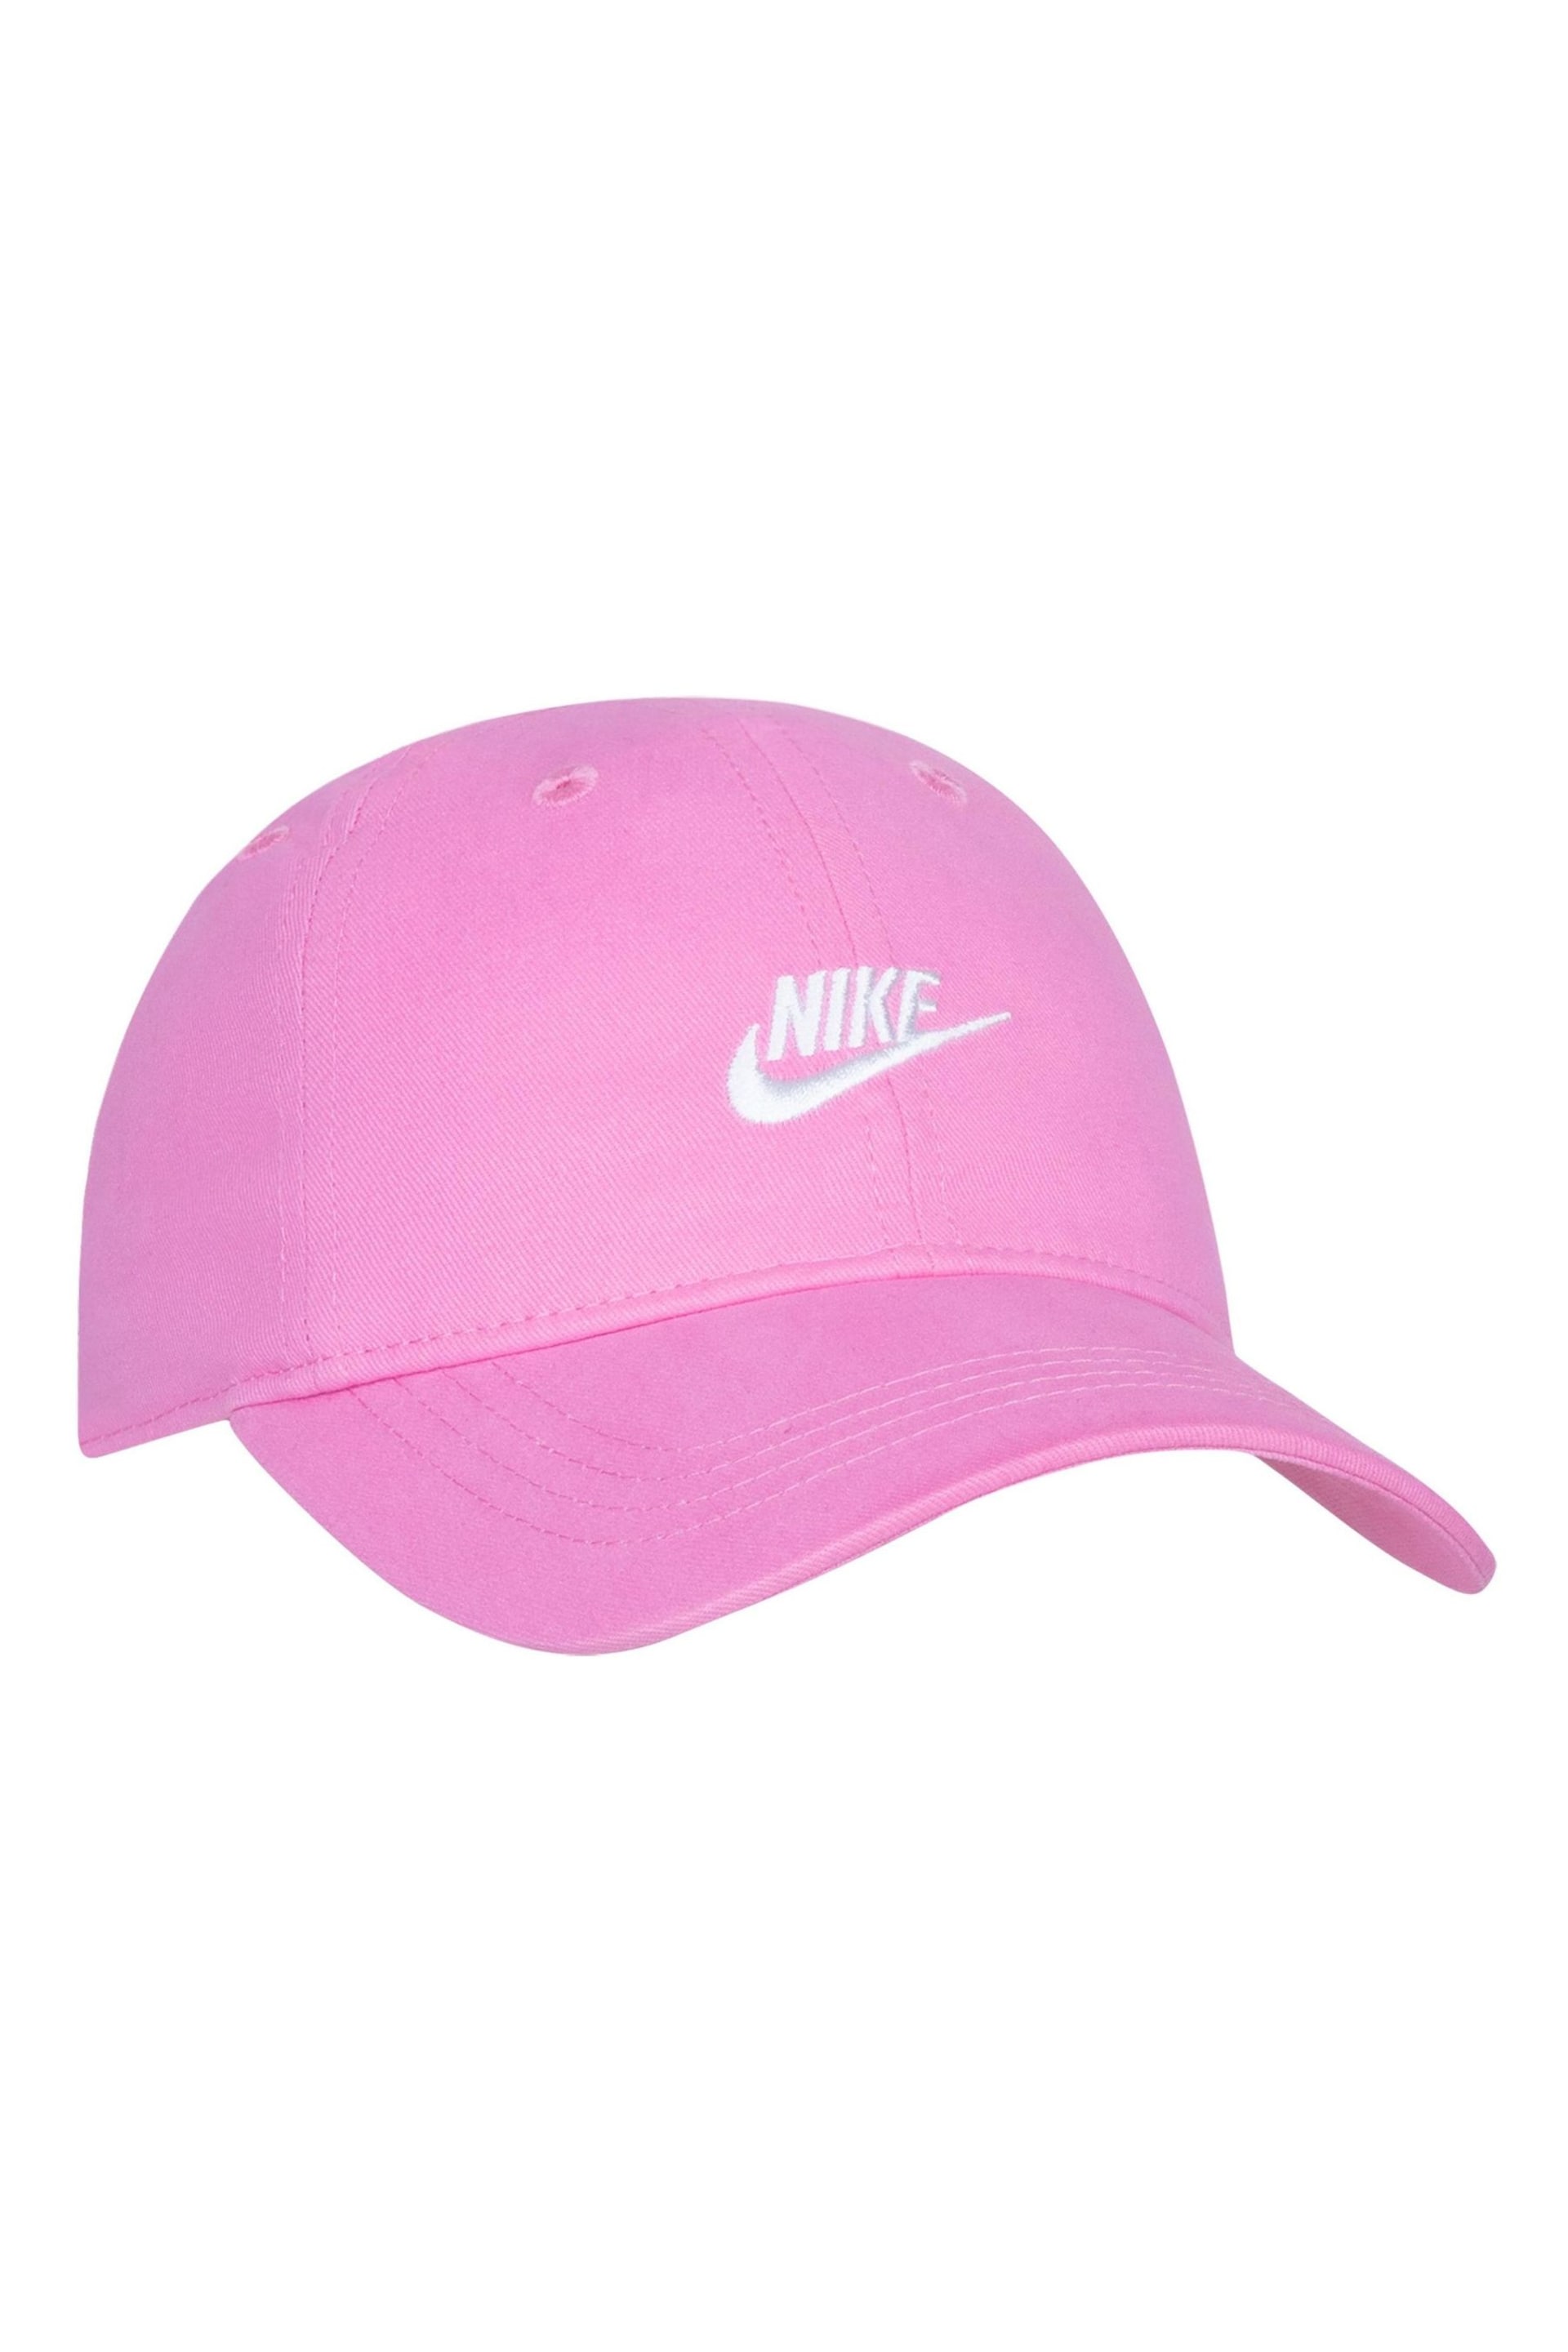 Nike Bright Pink Little Kids Futura Cap - Image 1 of 2